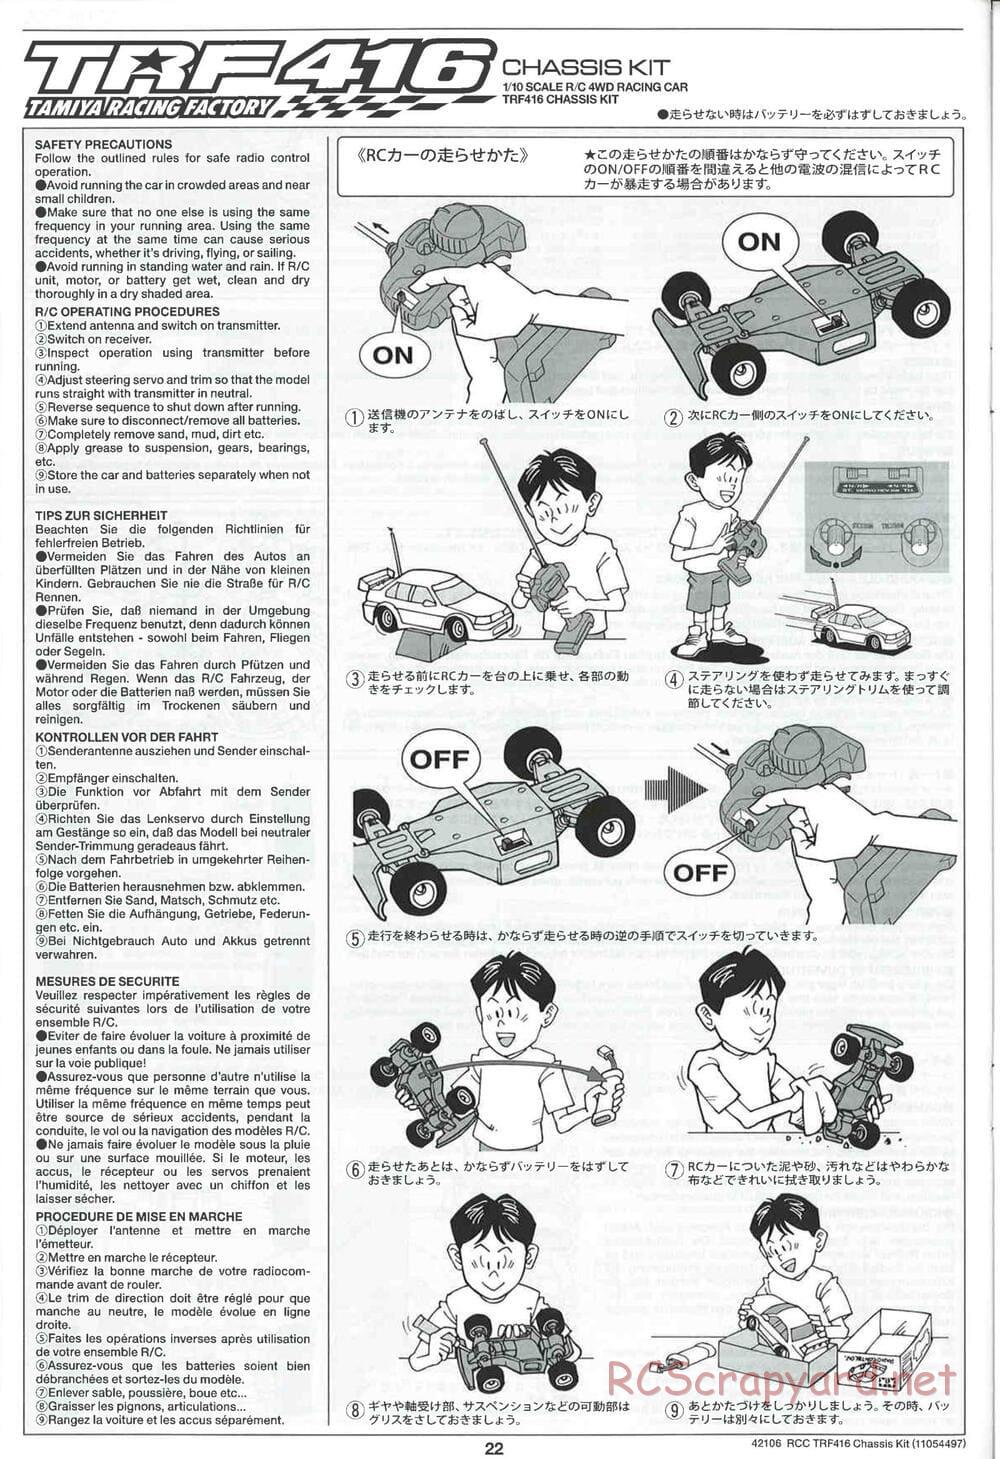 Tamiya - TRF416 Chassis - Manual - Page 22